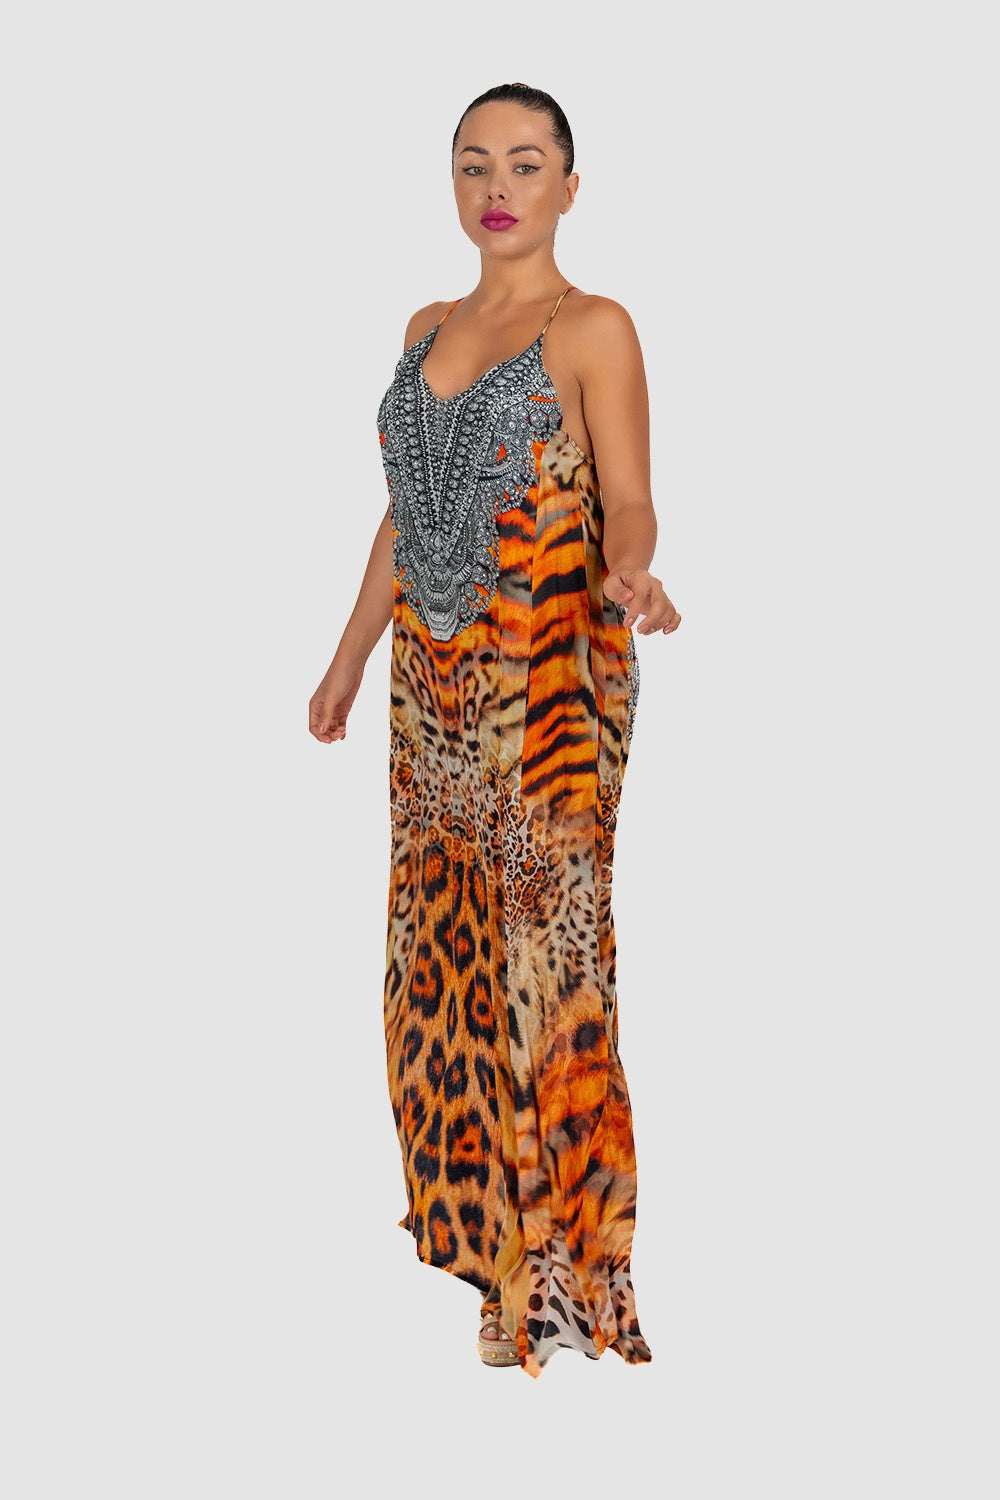 Casa Del Mar Orange Animal Print T-Back Dress